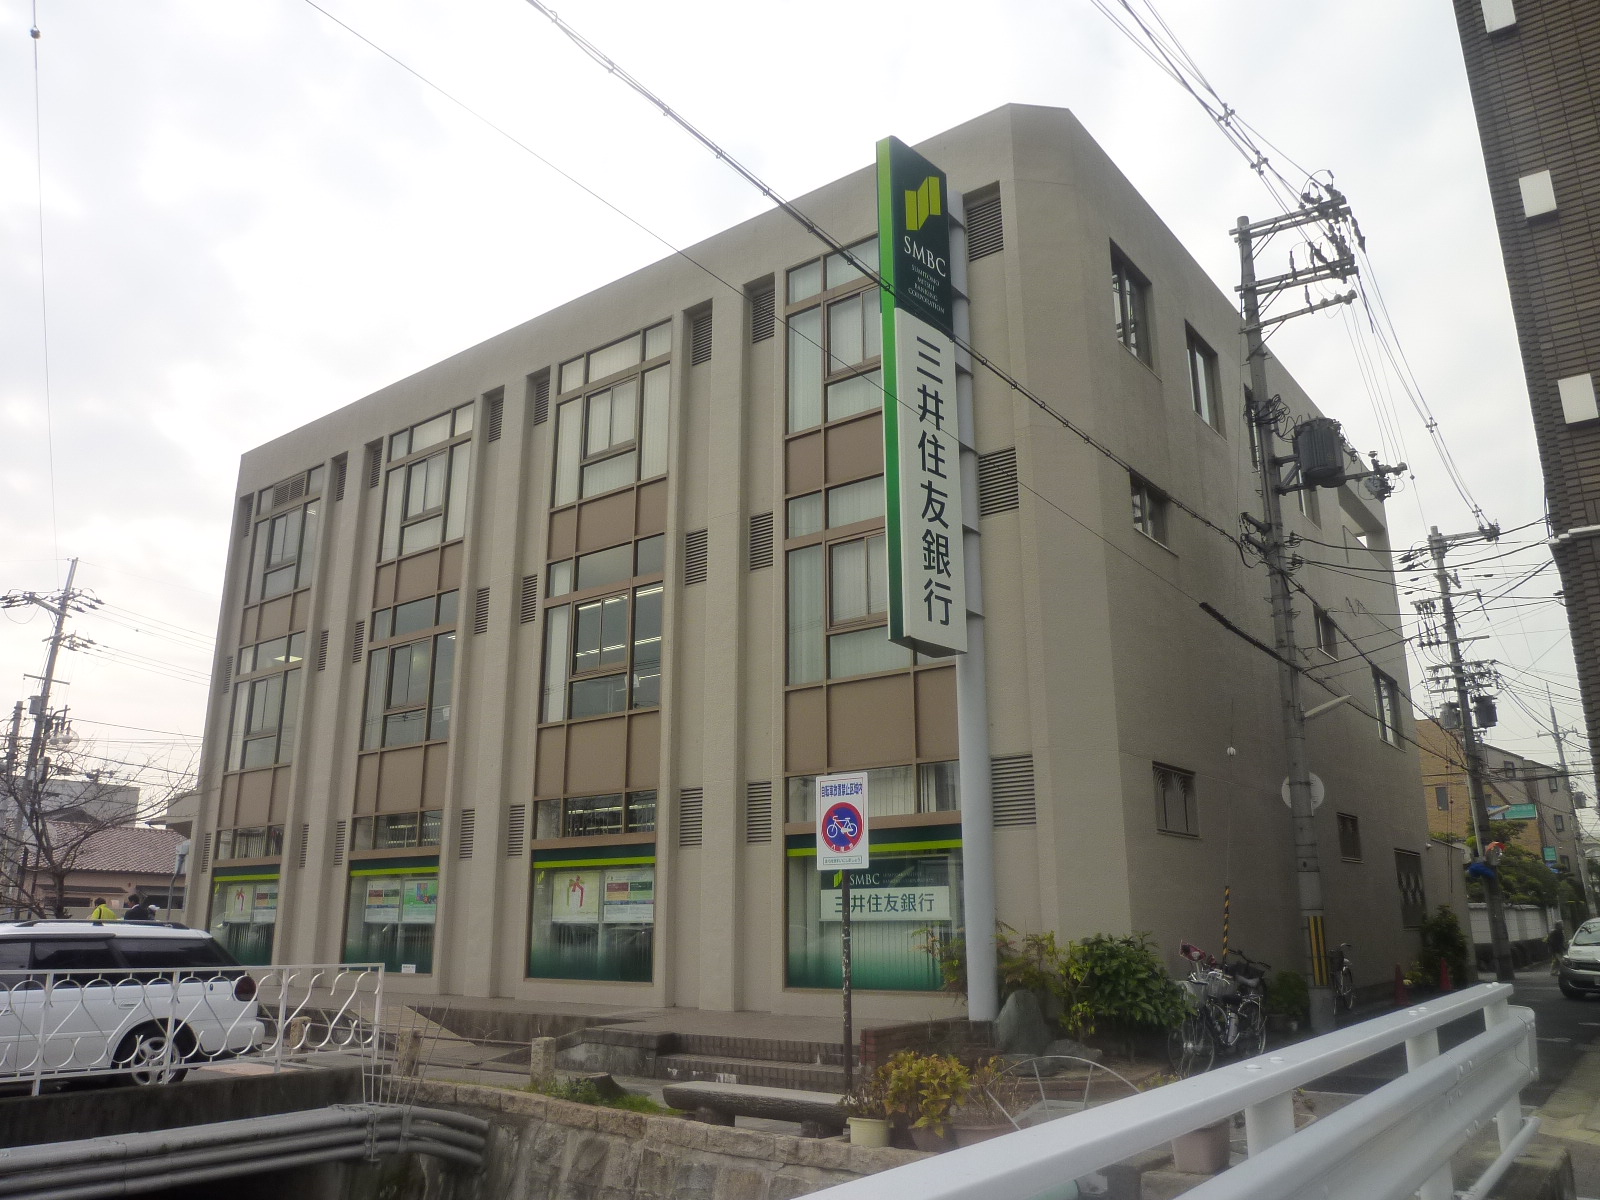 Bank. 619m to Sumitomo Mitsui Banking Corporation Yamamoto Branch (Bank)